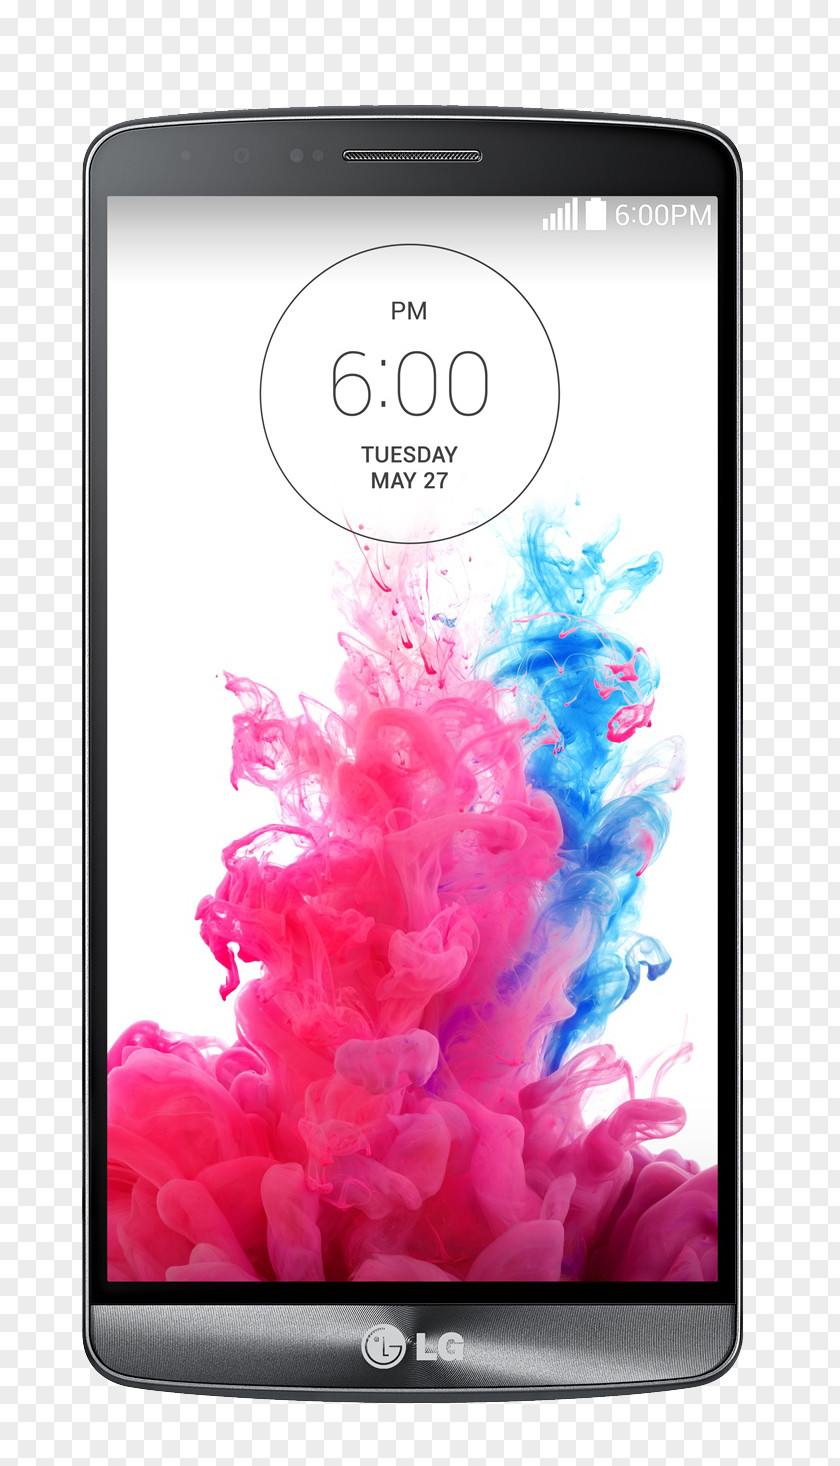 16 GBMetallic BlackUnlockedGSM Smartphone Android LG G3 D85516 GBSilk WhiteUnlockedGSMSmartphone Electronics D855 PNG